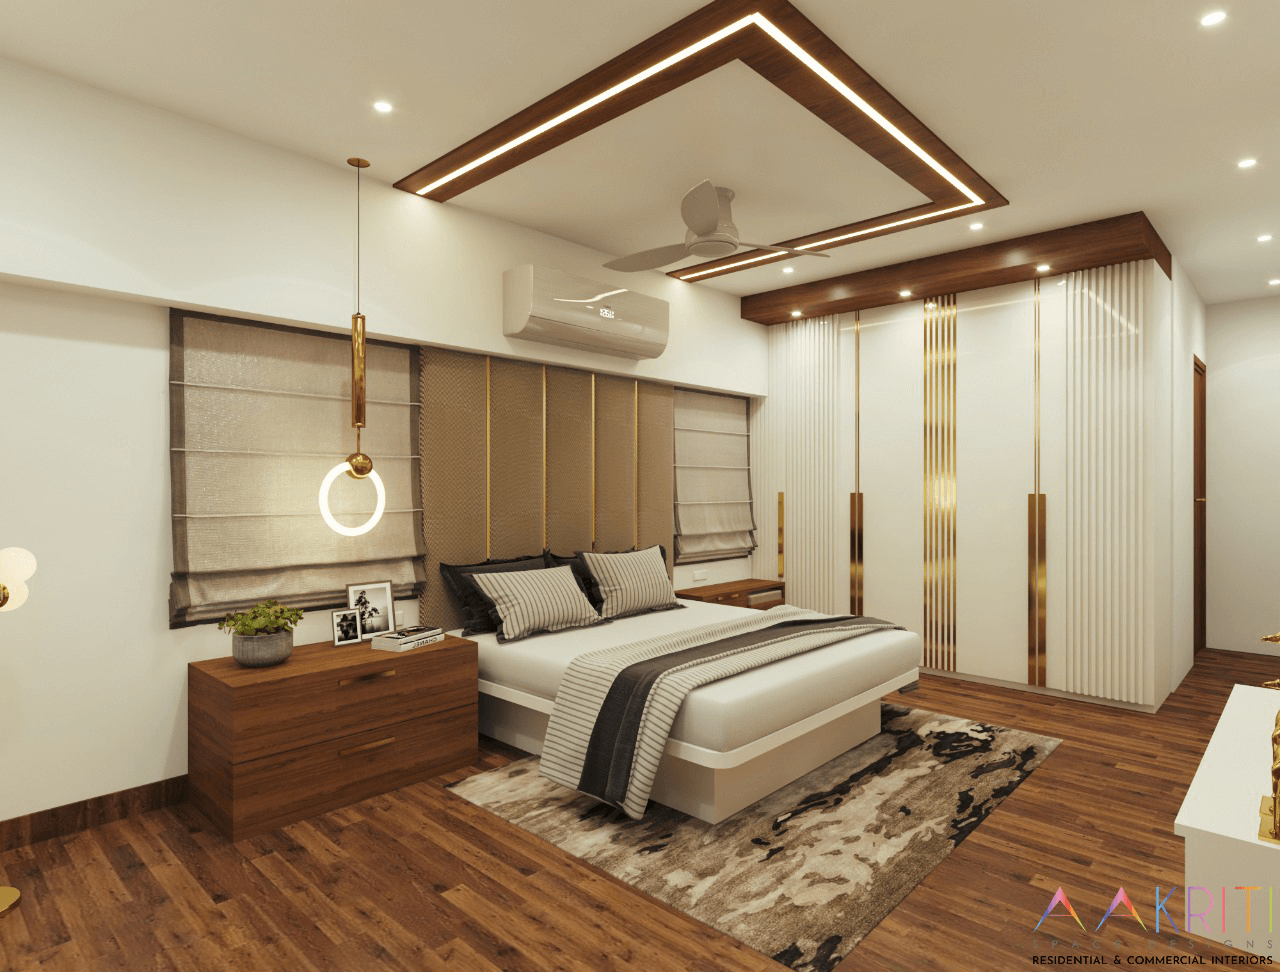 AAkruti Interiors is the dream venture of Amol Joshi  the Interior  Designer Malad Mumbai We would like to share photos of   Interior  design Interior Design